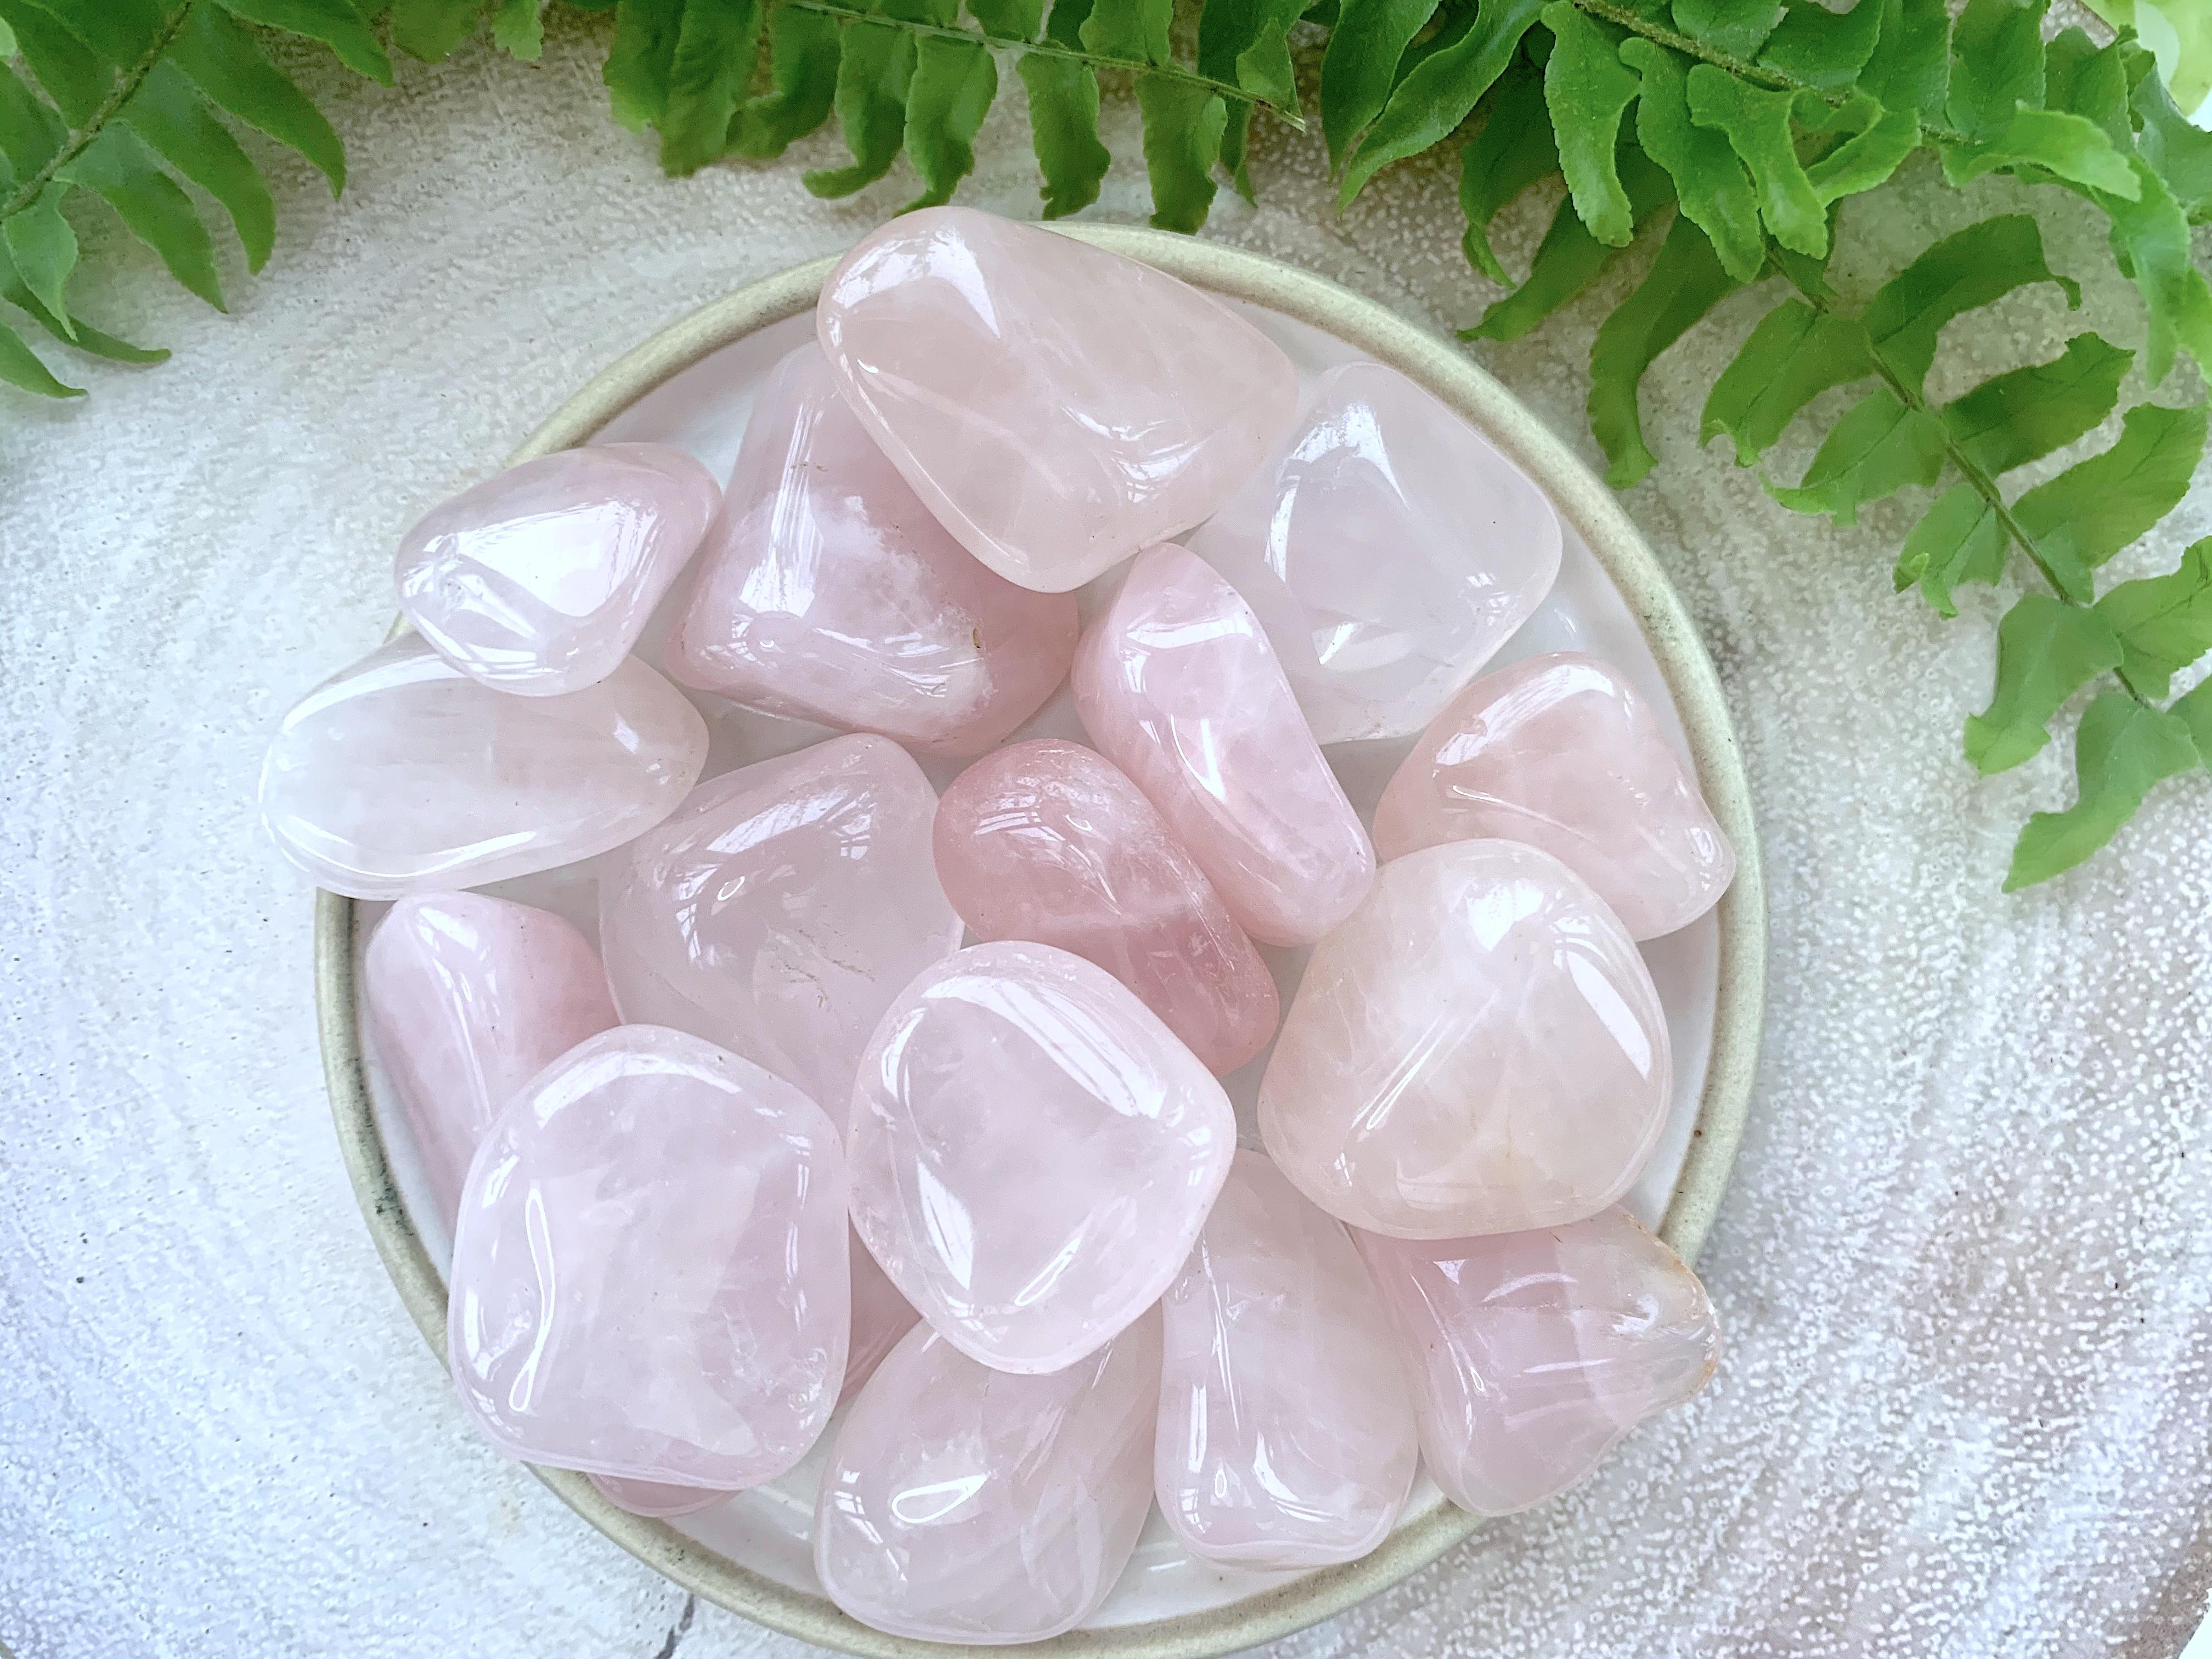 Rose quartz tumbled stones rocks, pink quartz gifts, UK online crystal shop Lincolnshire